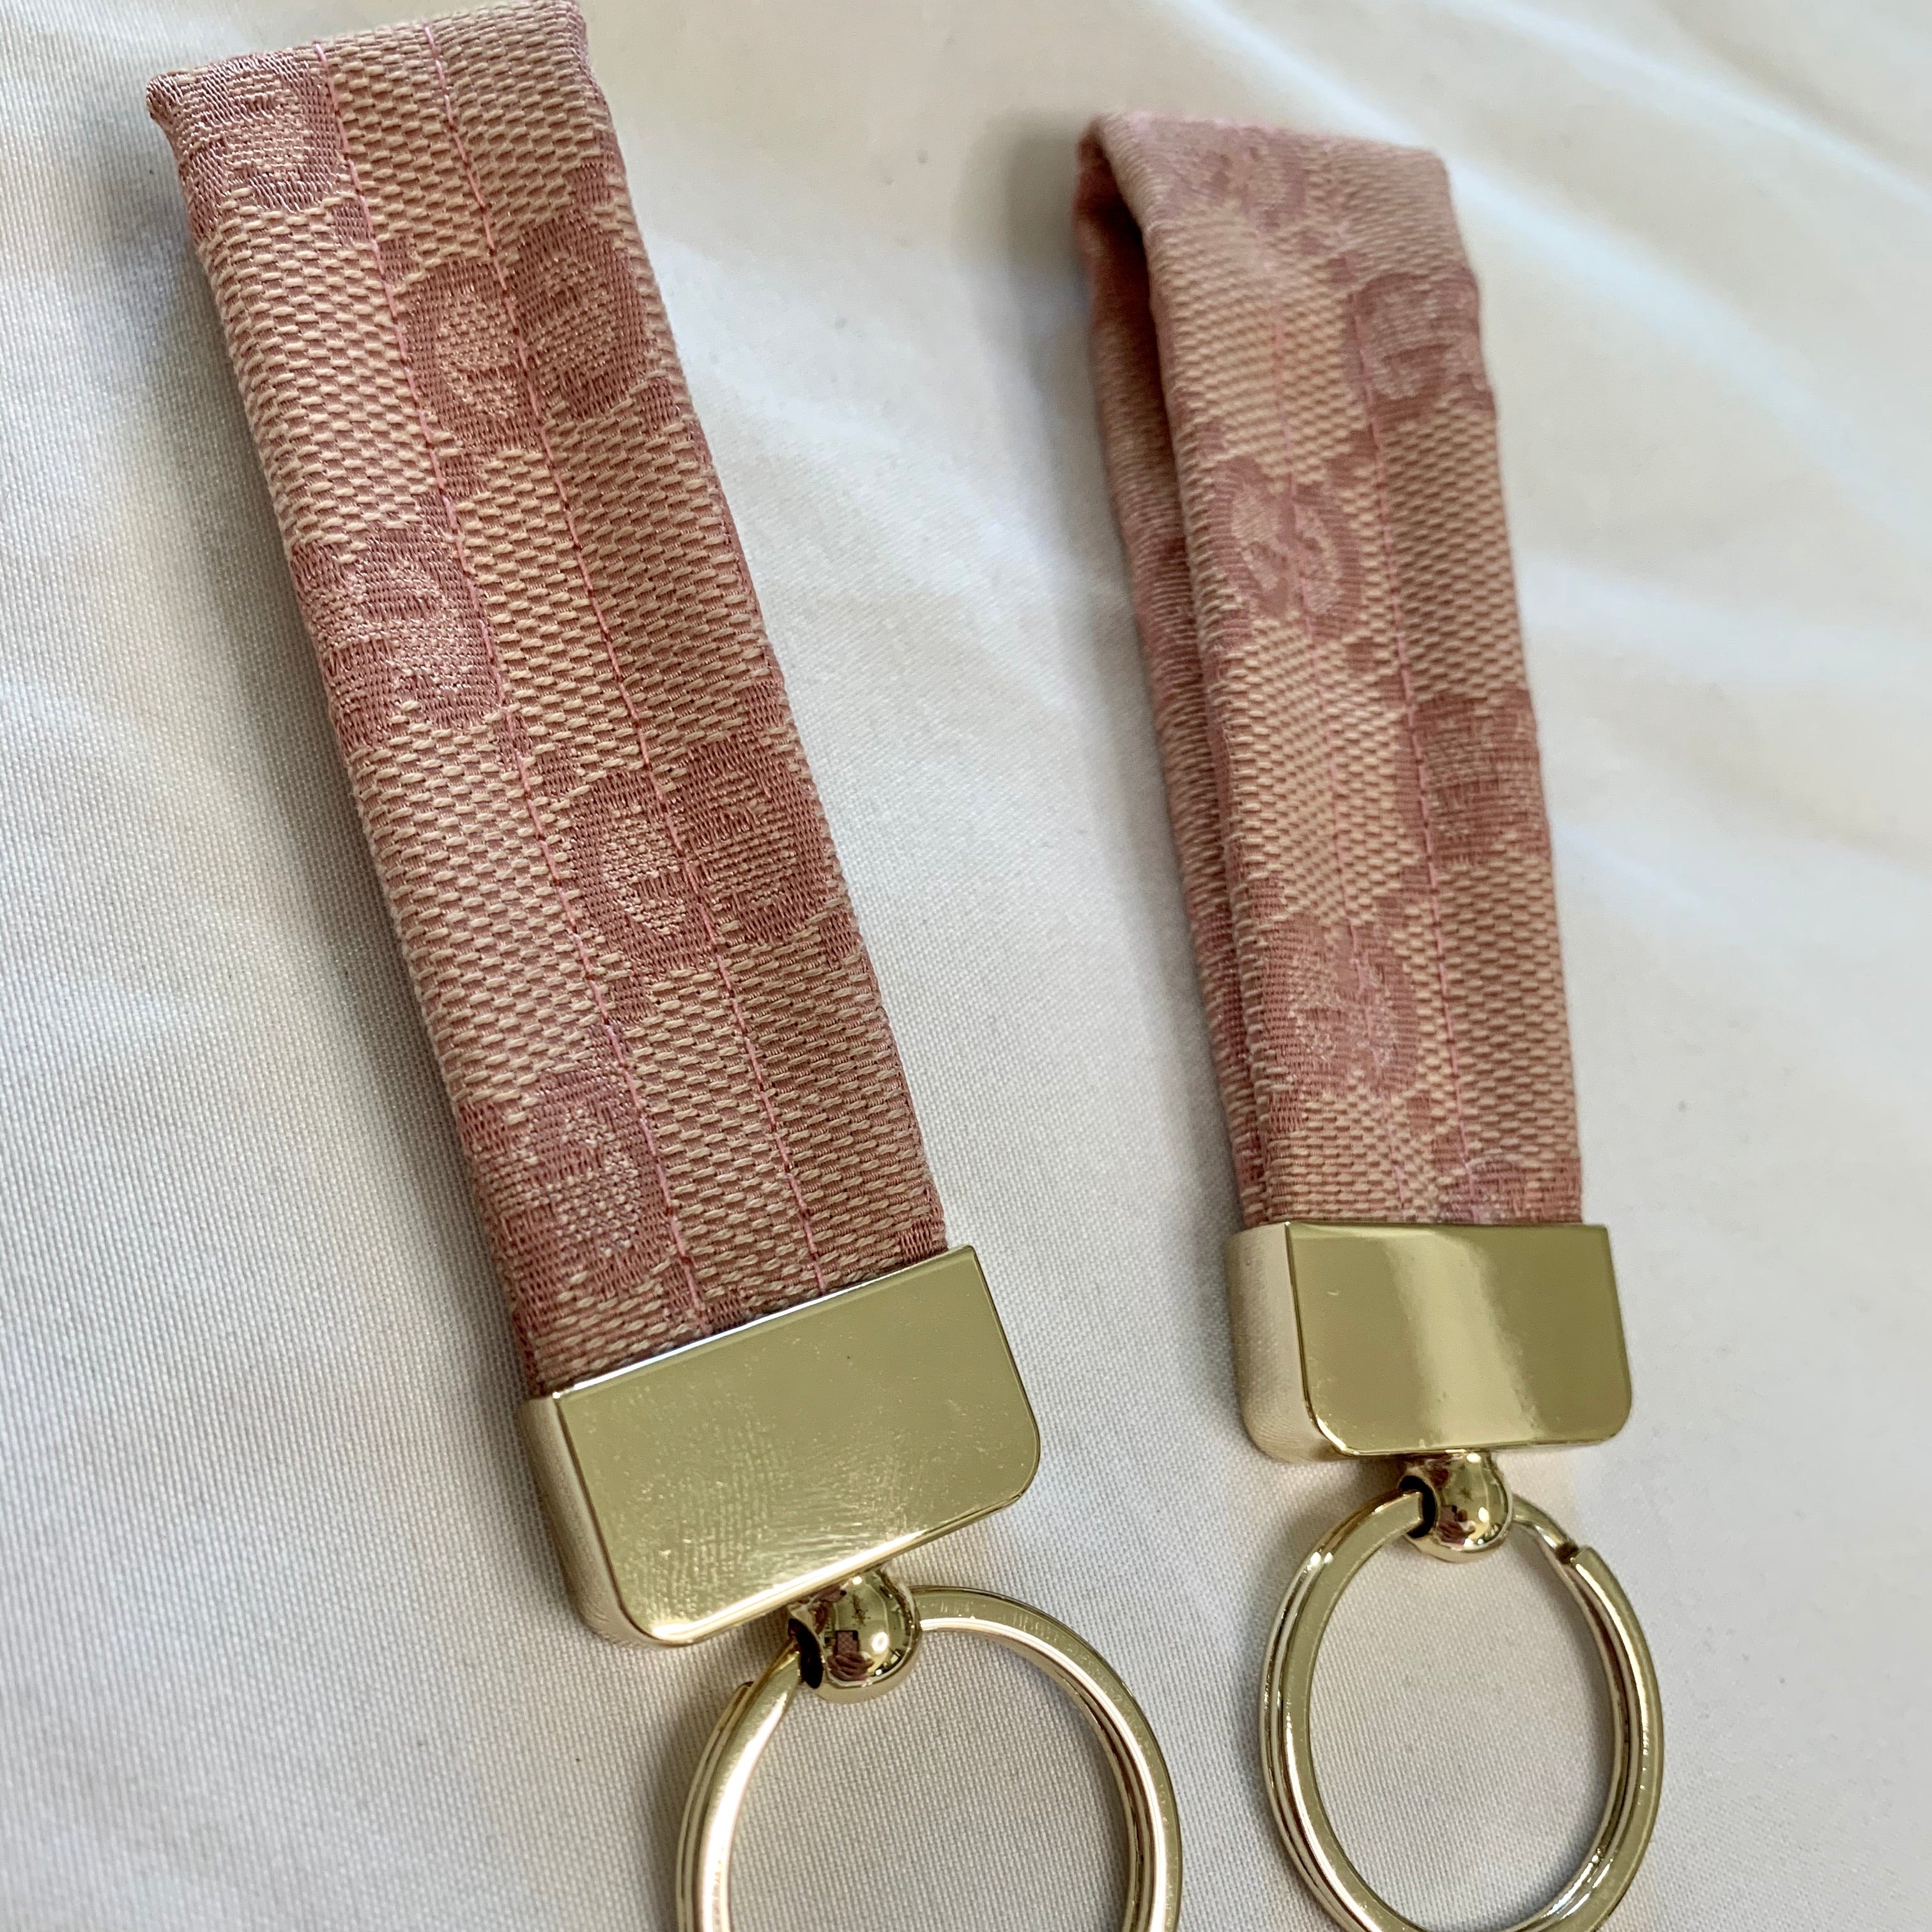 pink gucci keychain